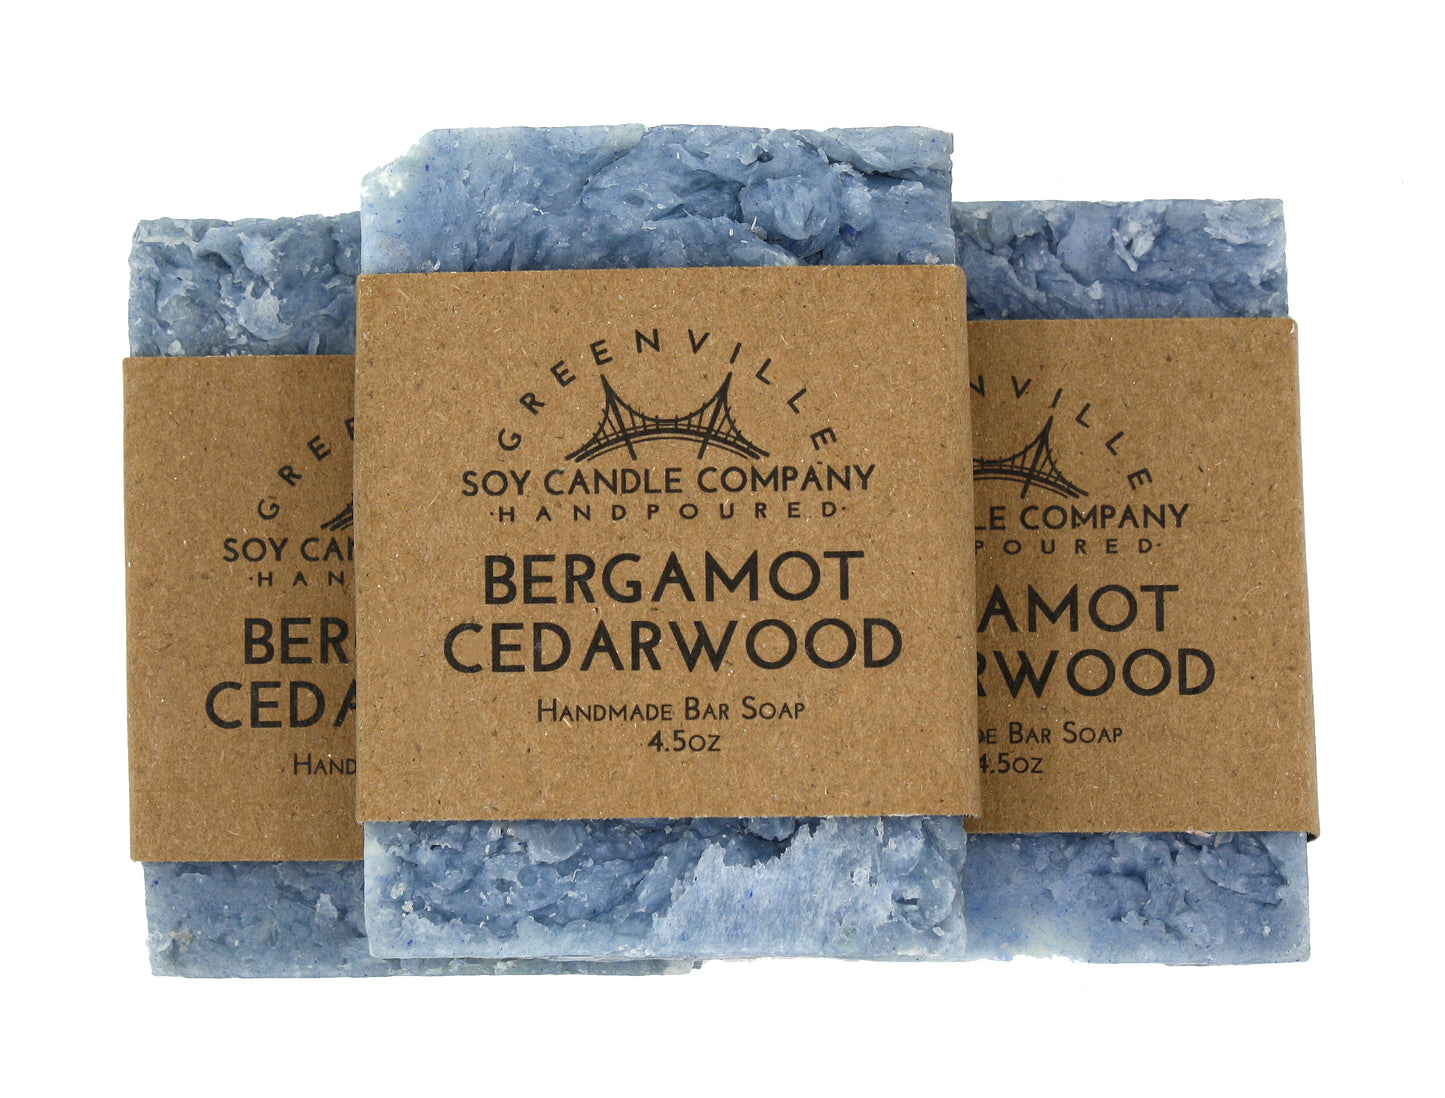 Bergamot Cedarwood, Handmade Natural Bar Soap